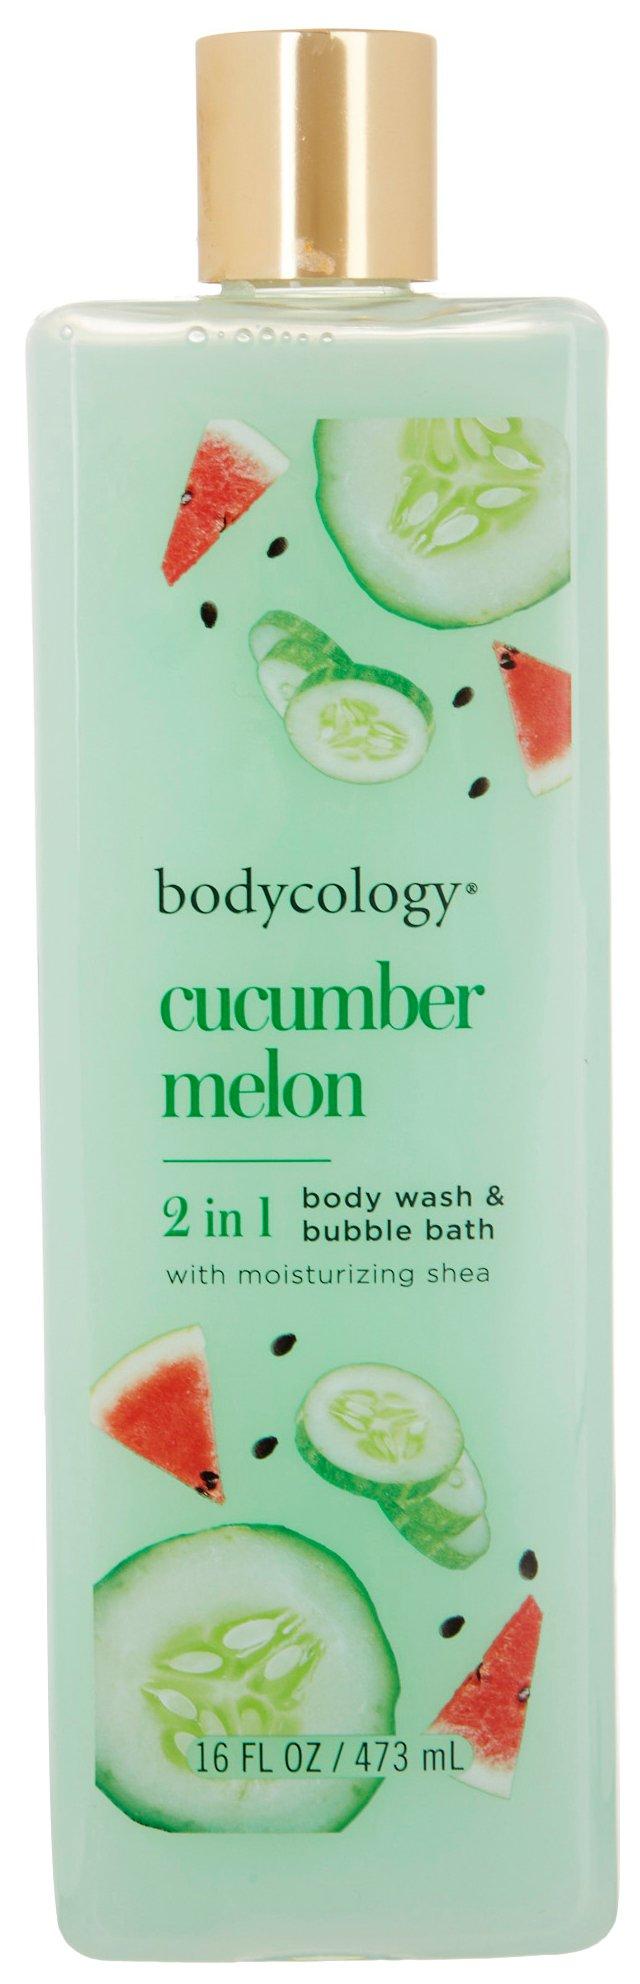 Bodycology Cucumber Melon Body Wash & Bubble Bath